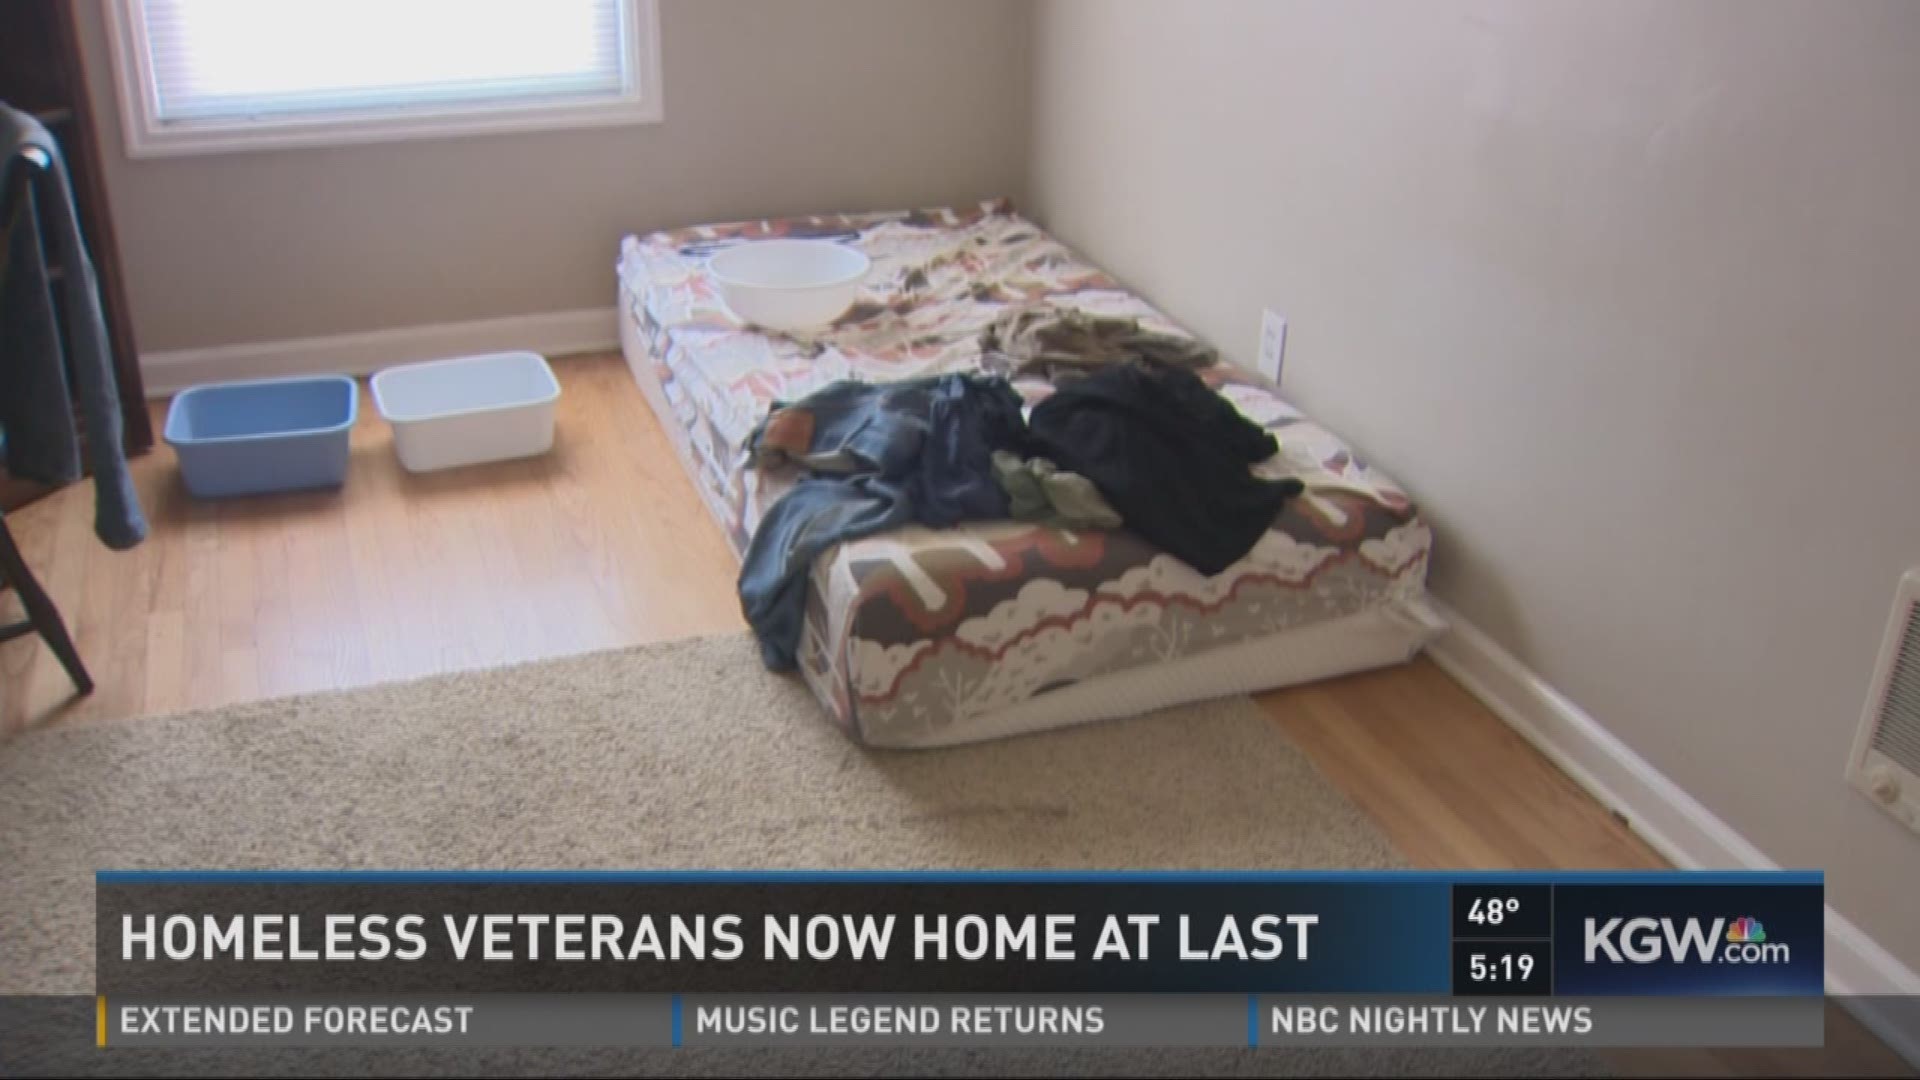 Homeless veterans now home at last